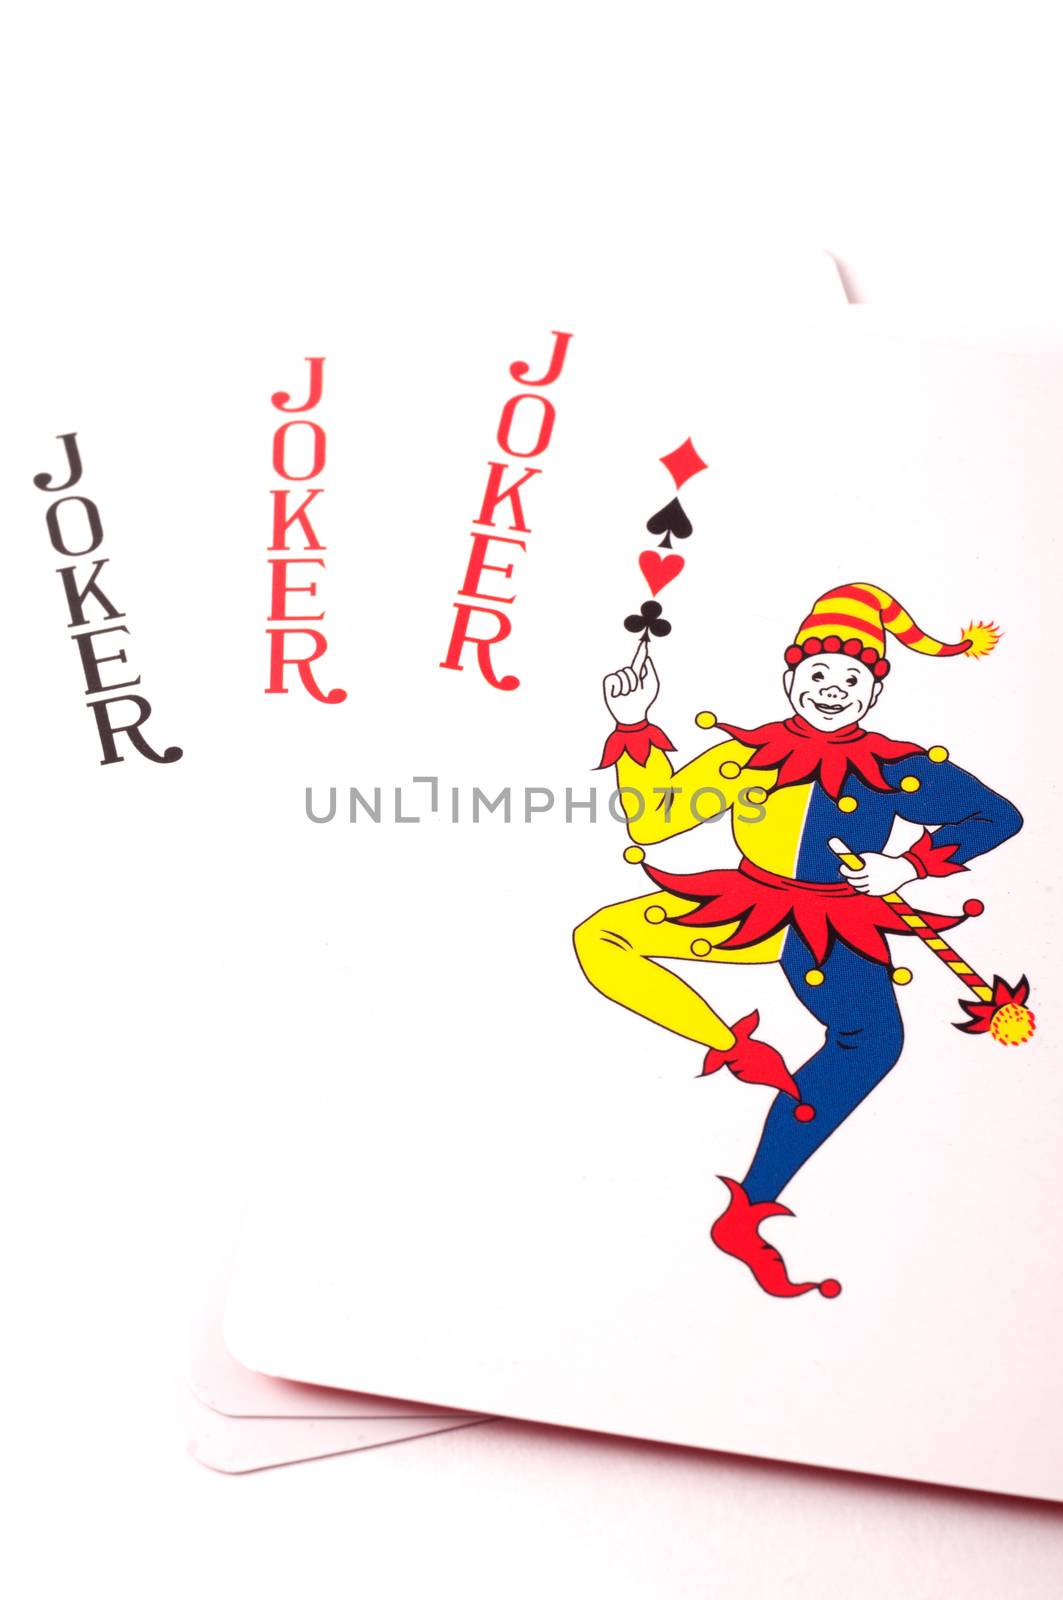 Three joker cards isolated on white background